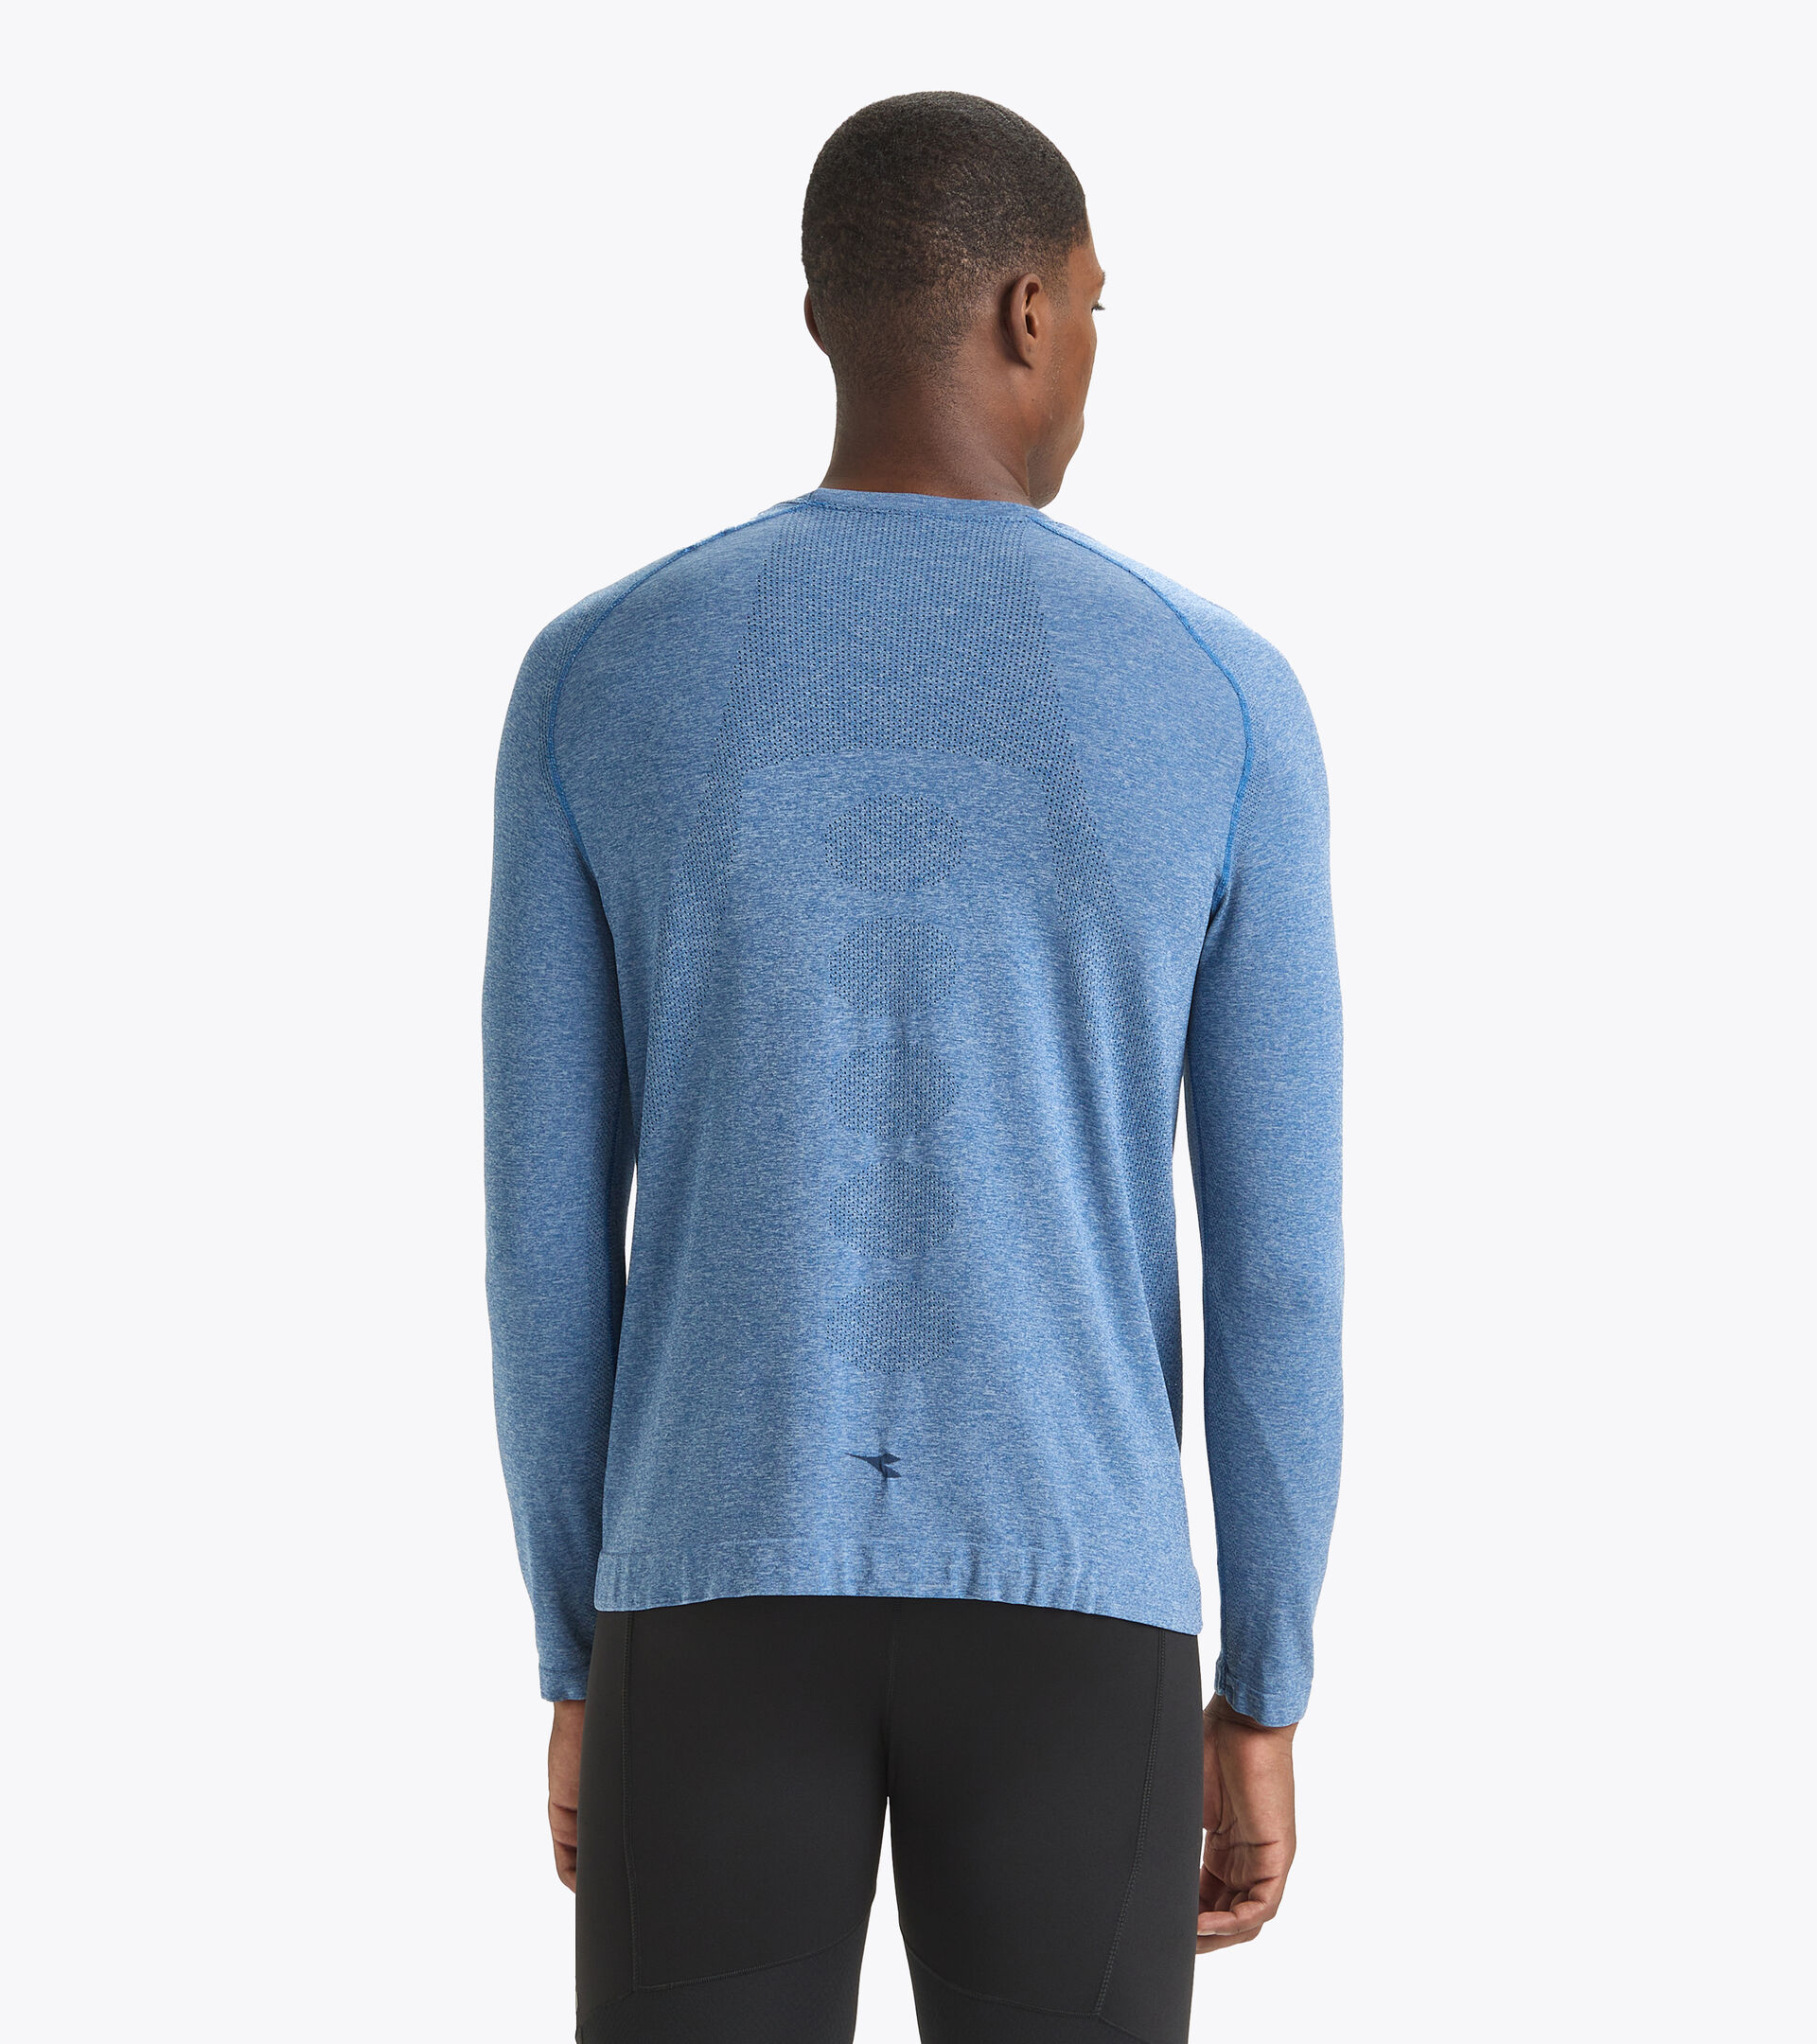 Long-sleeved thermal shirt - Men LS T-SHIRT SKIN FRIENDLY DUTCH BLUE - Diadora